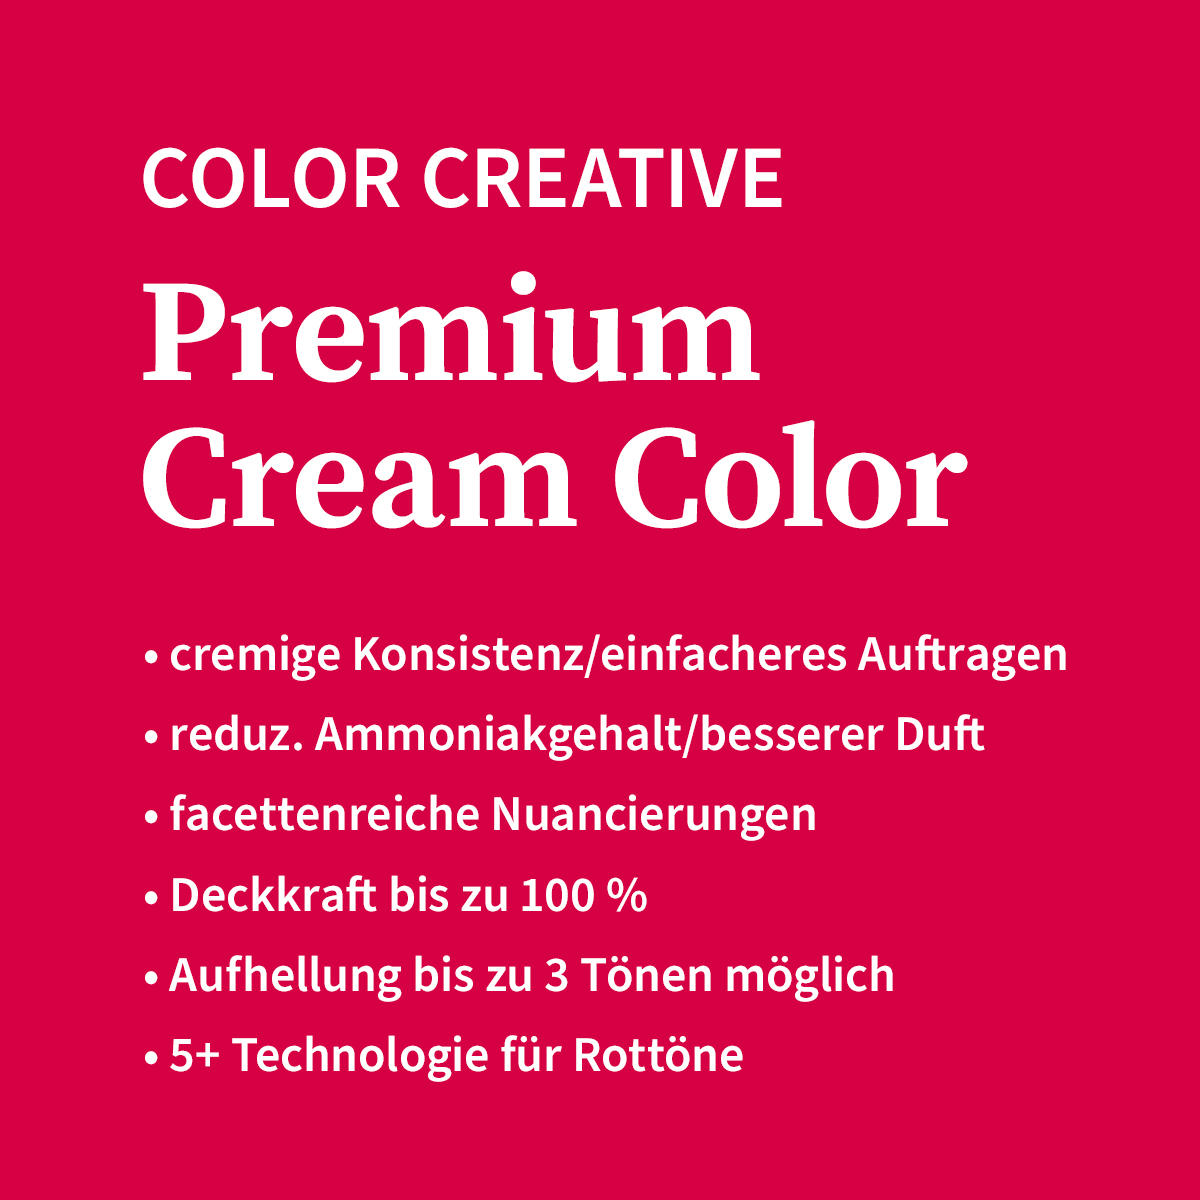 Basler Color Creative Premium Cream Color 10/8 rubio claro perlado, tubo 60 ml - 4